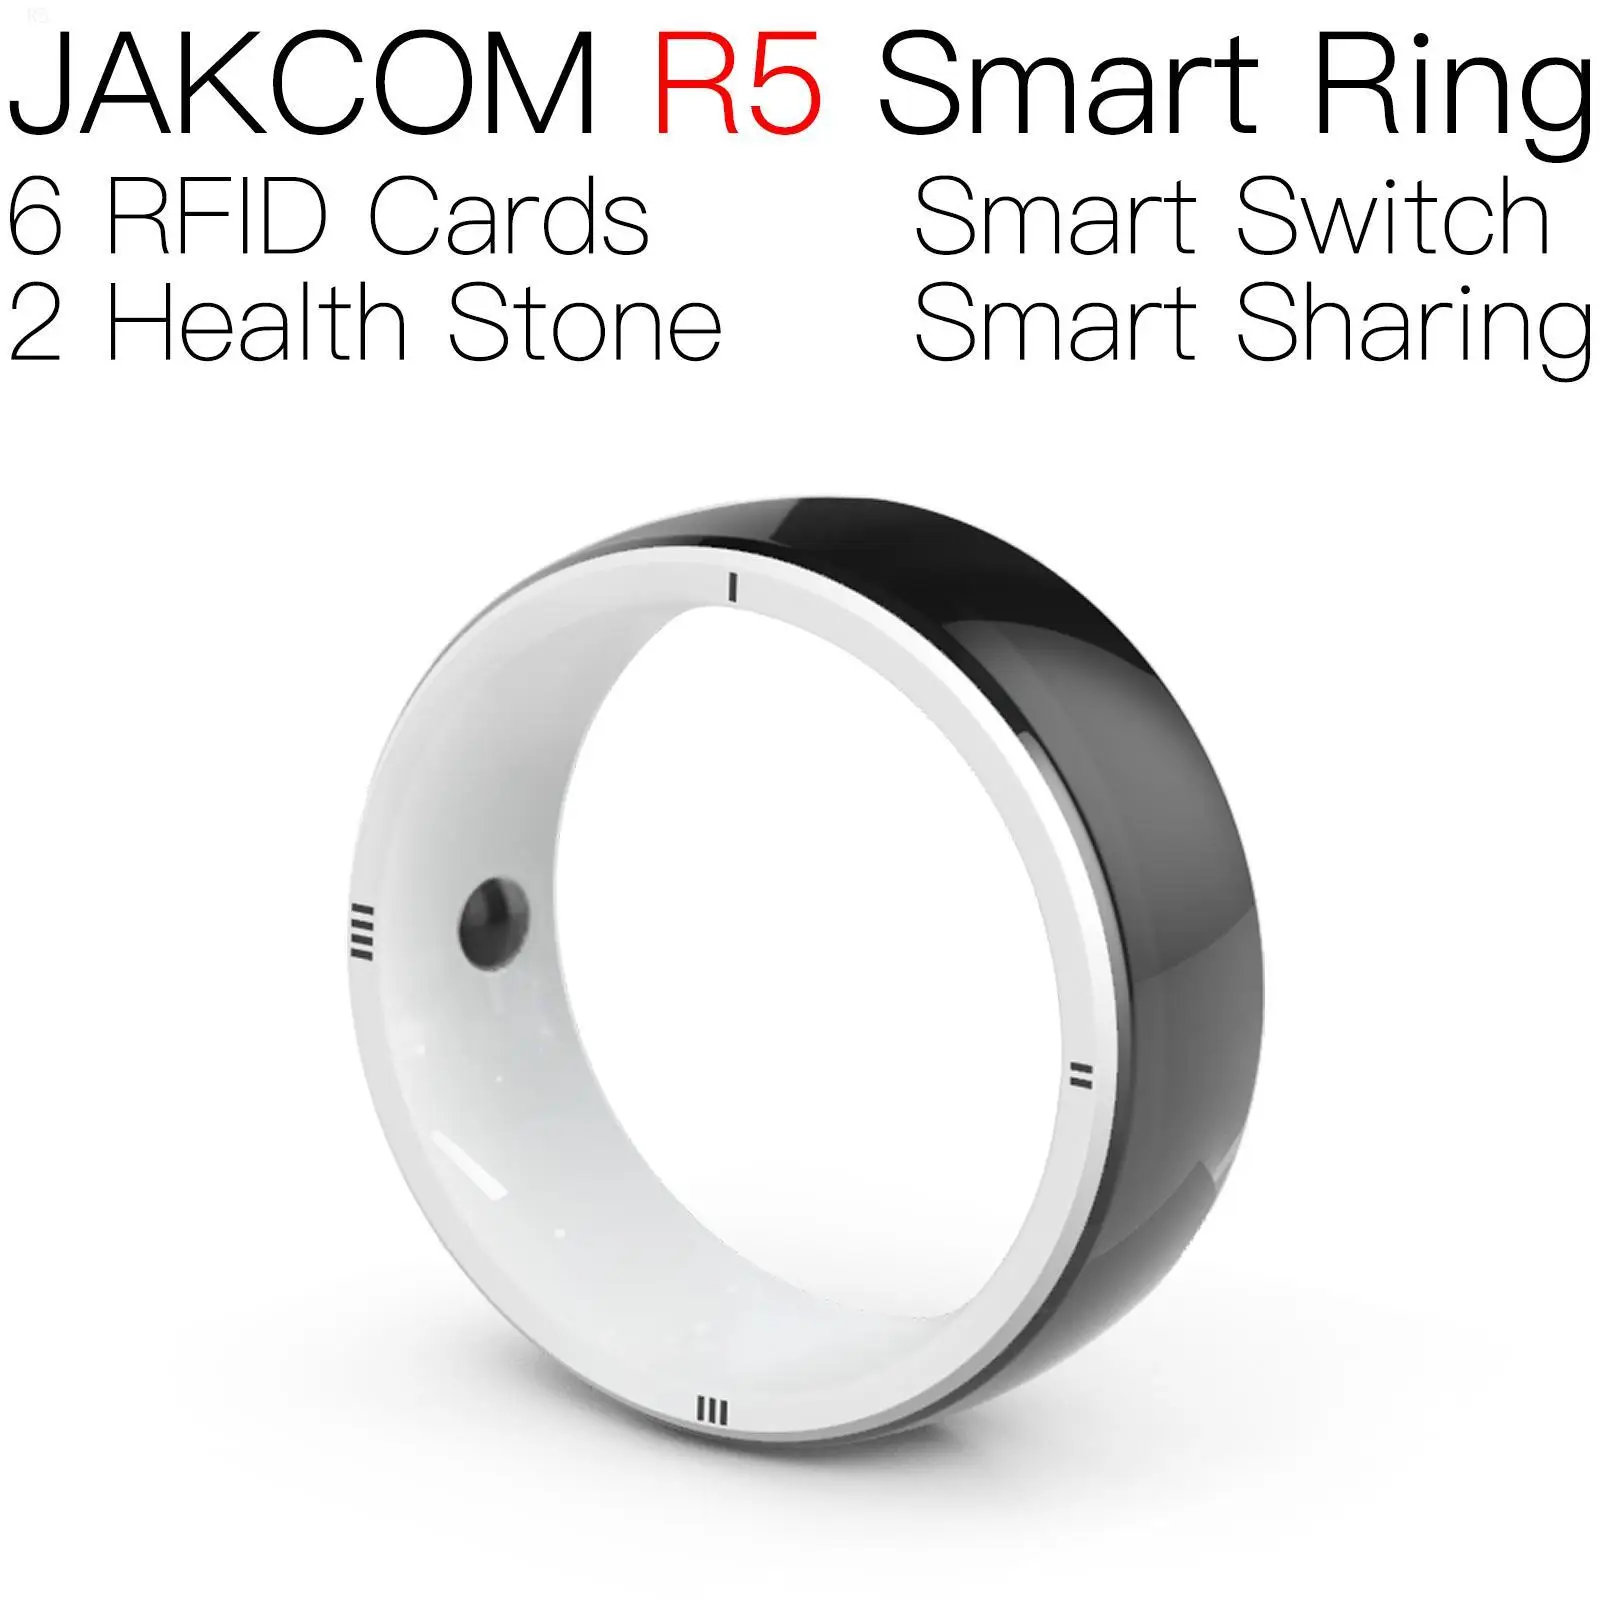 

JAKCOM R5 Smart Ring better than caterpillar alien rfid writable chip uid valentine card cr80 568b nfc sticker em4100 writer